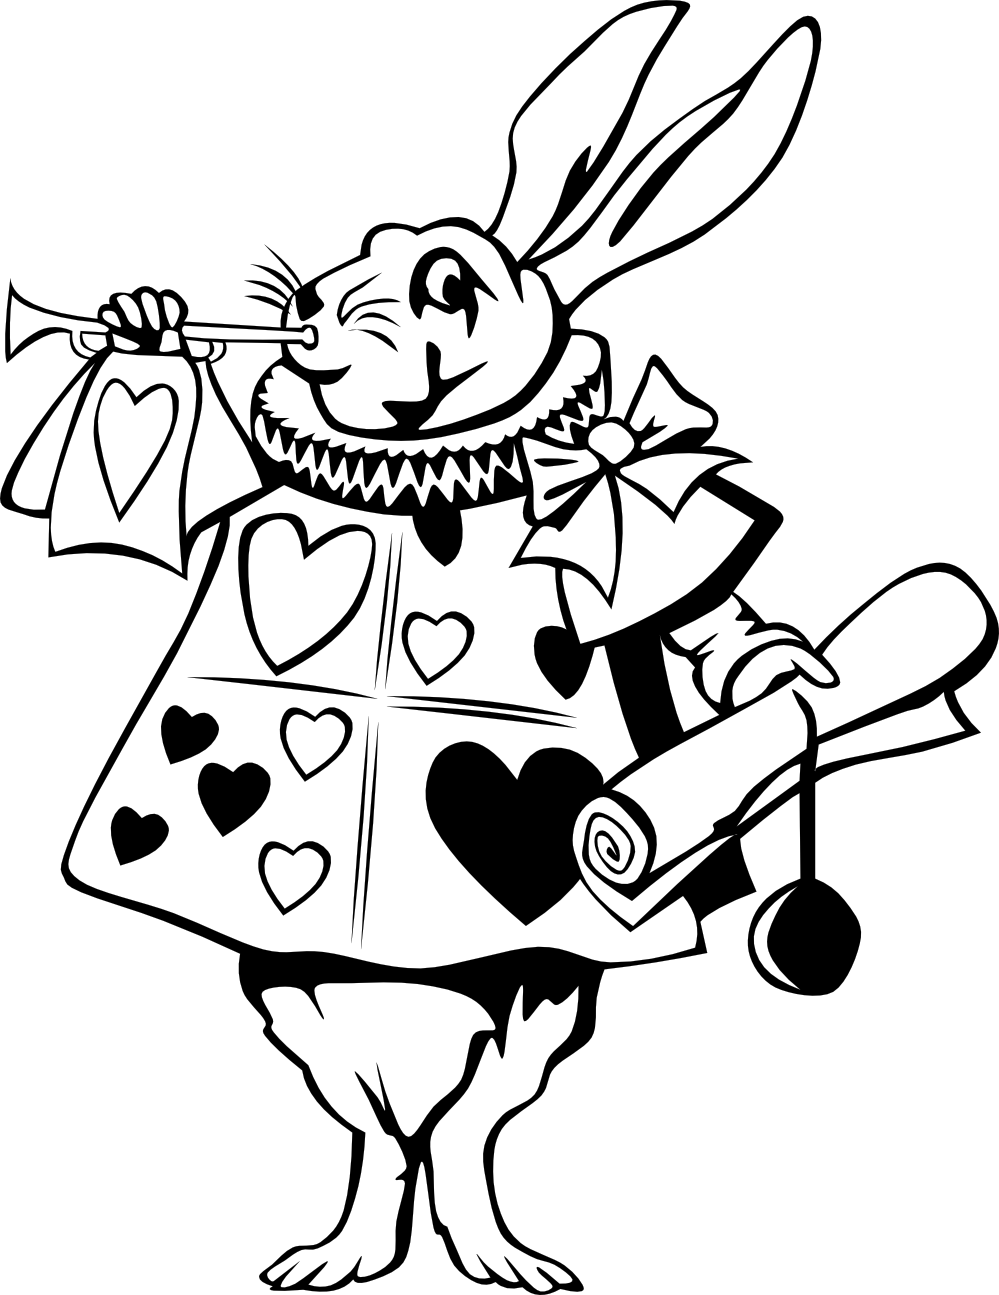 Gerald g Rabbit from Alice Wonderland Black White Art Coloring ...